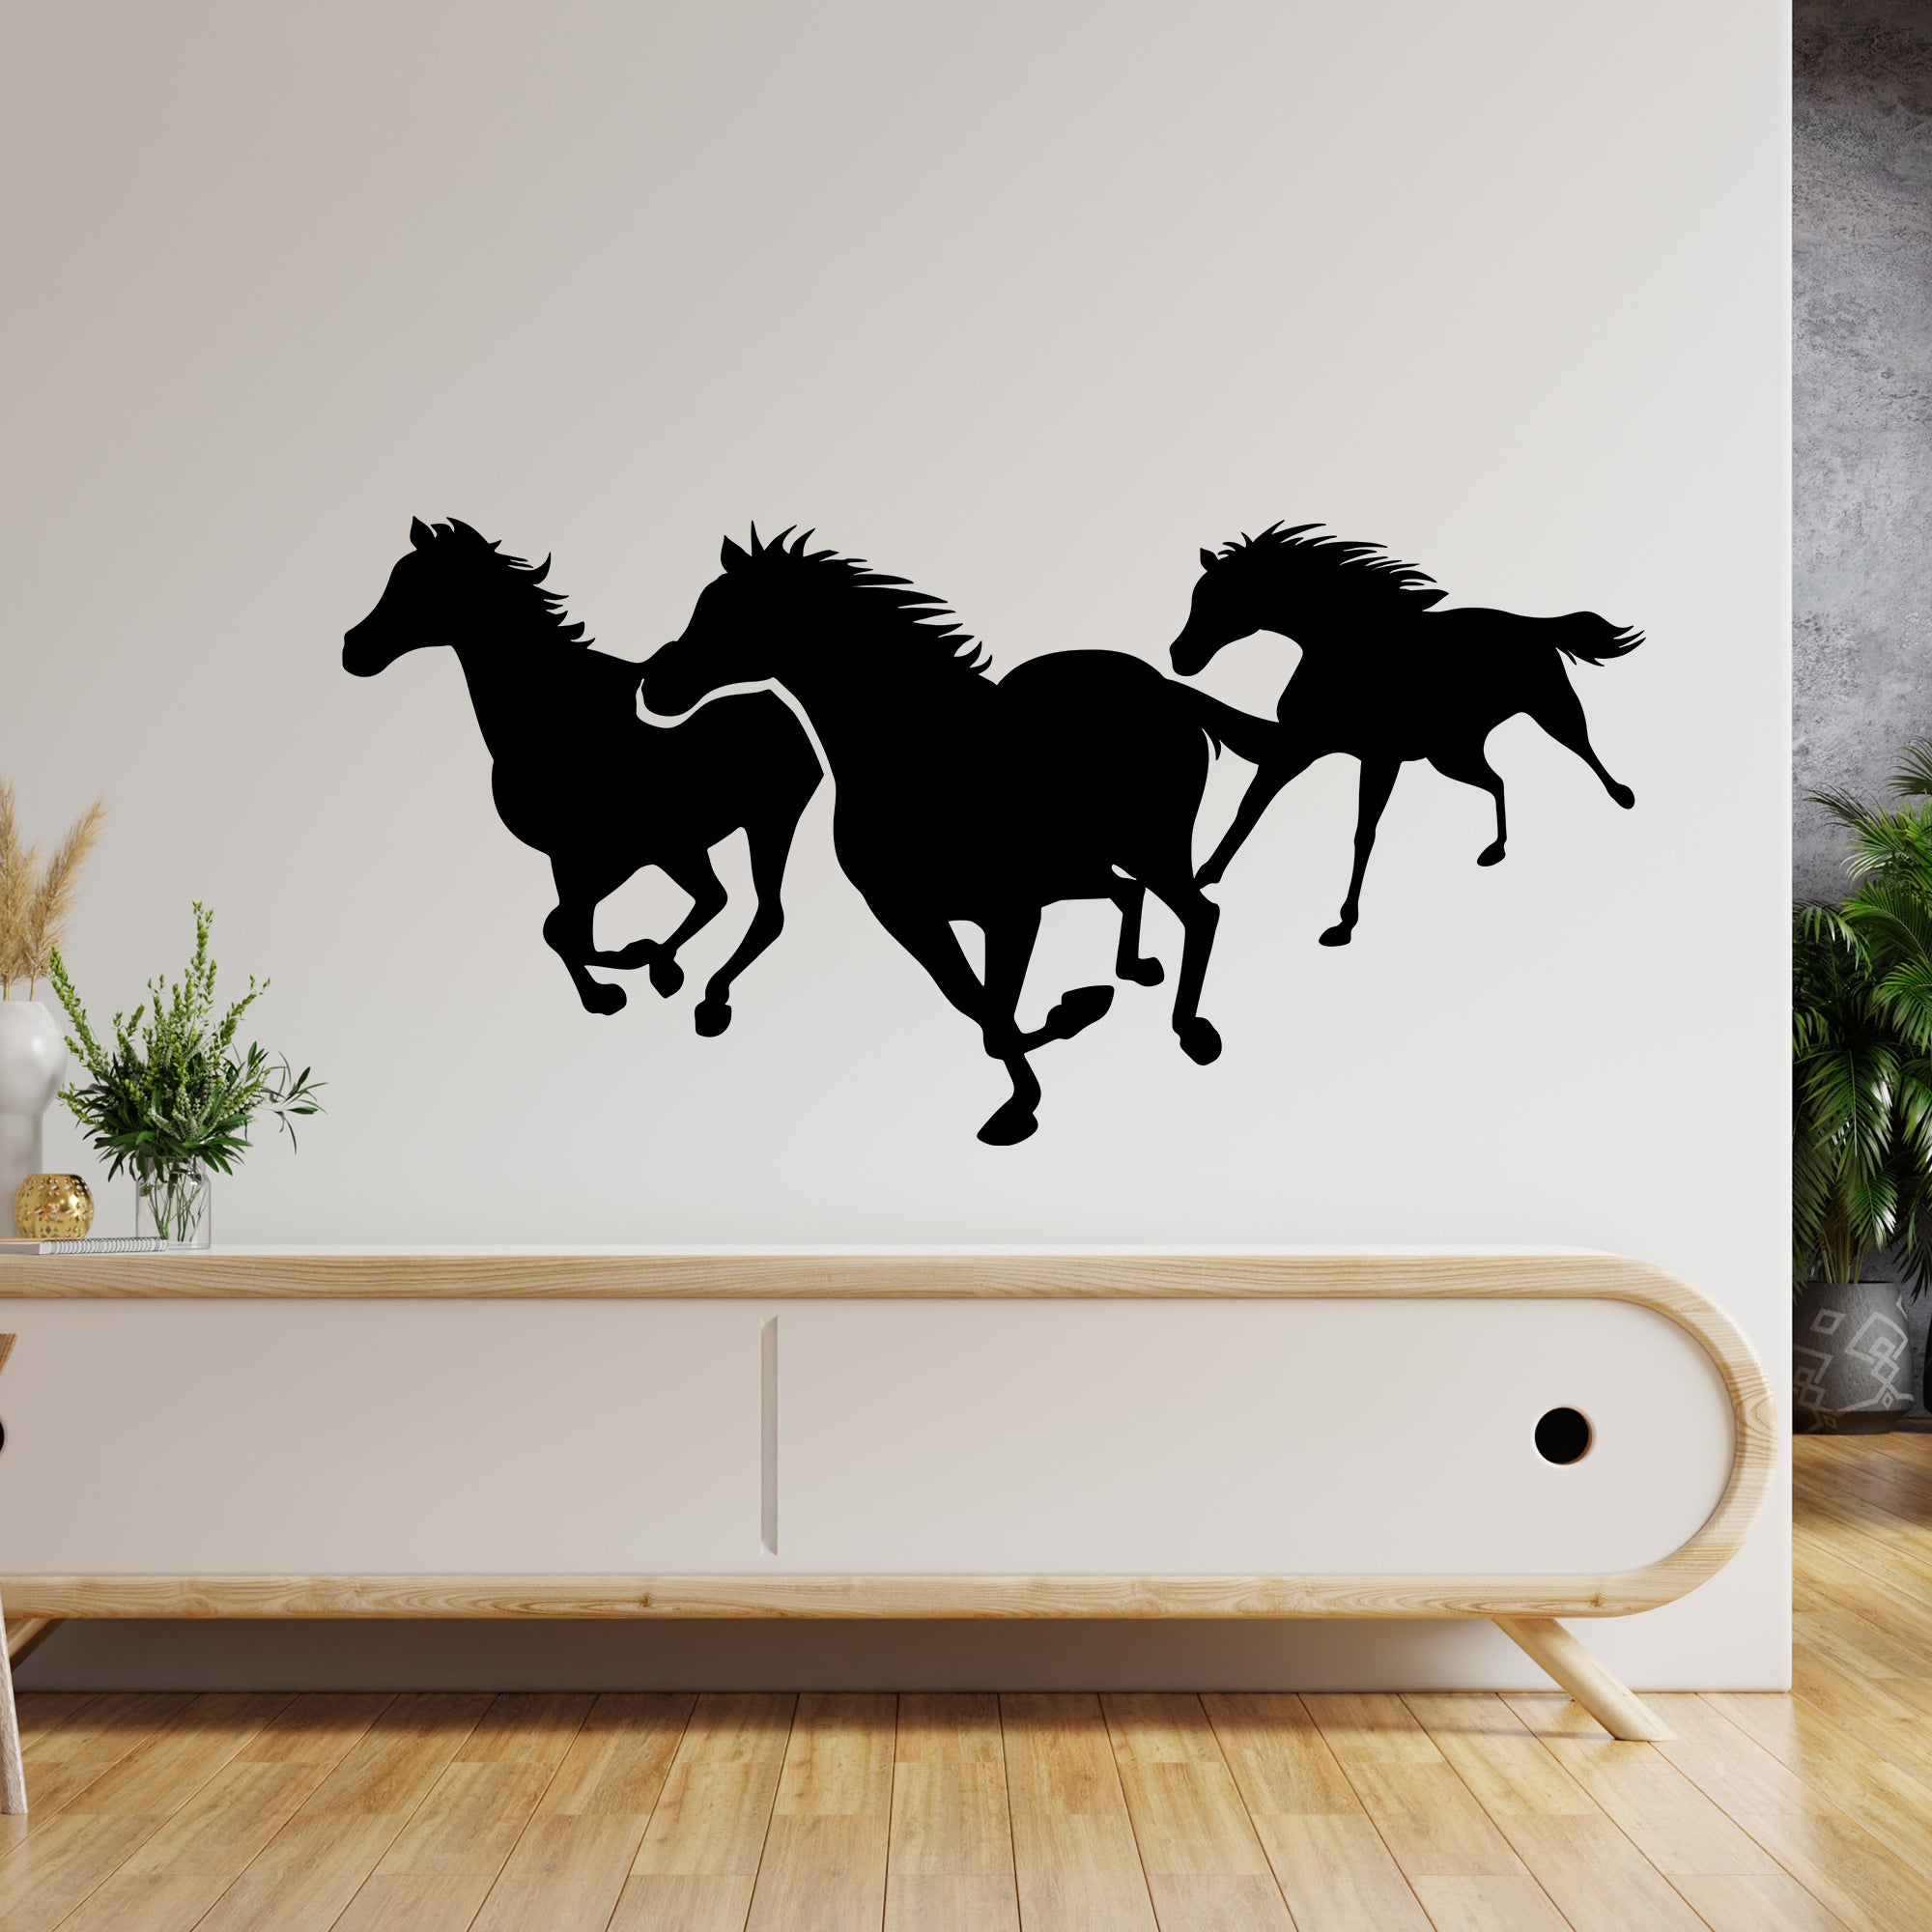 Three Horses Running Premium Quality Wall Sticker